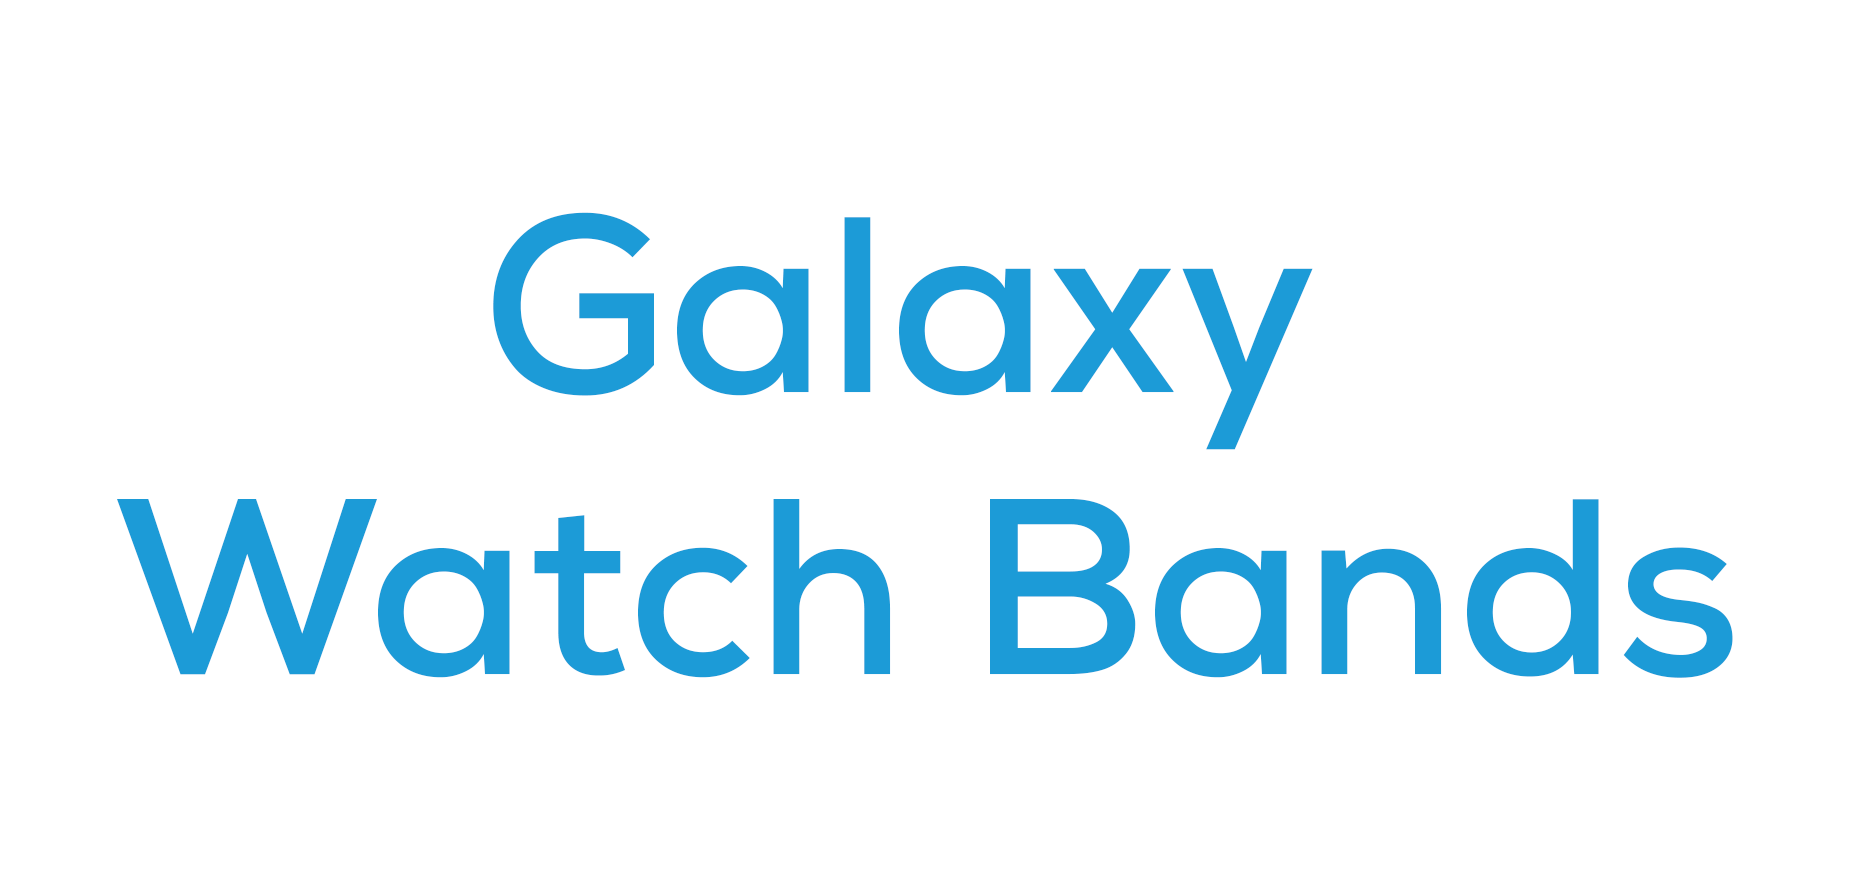 Galaxy Watch Series Bands